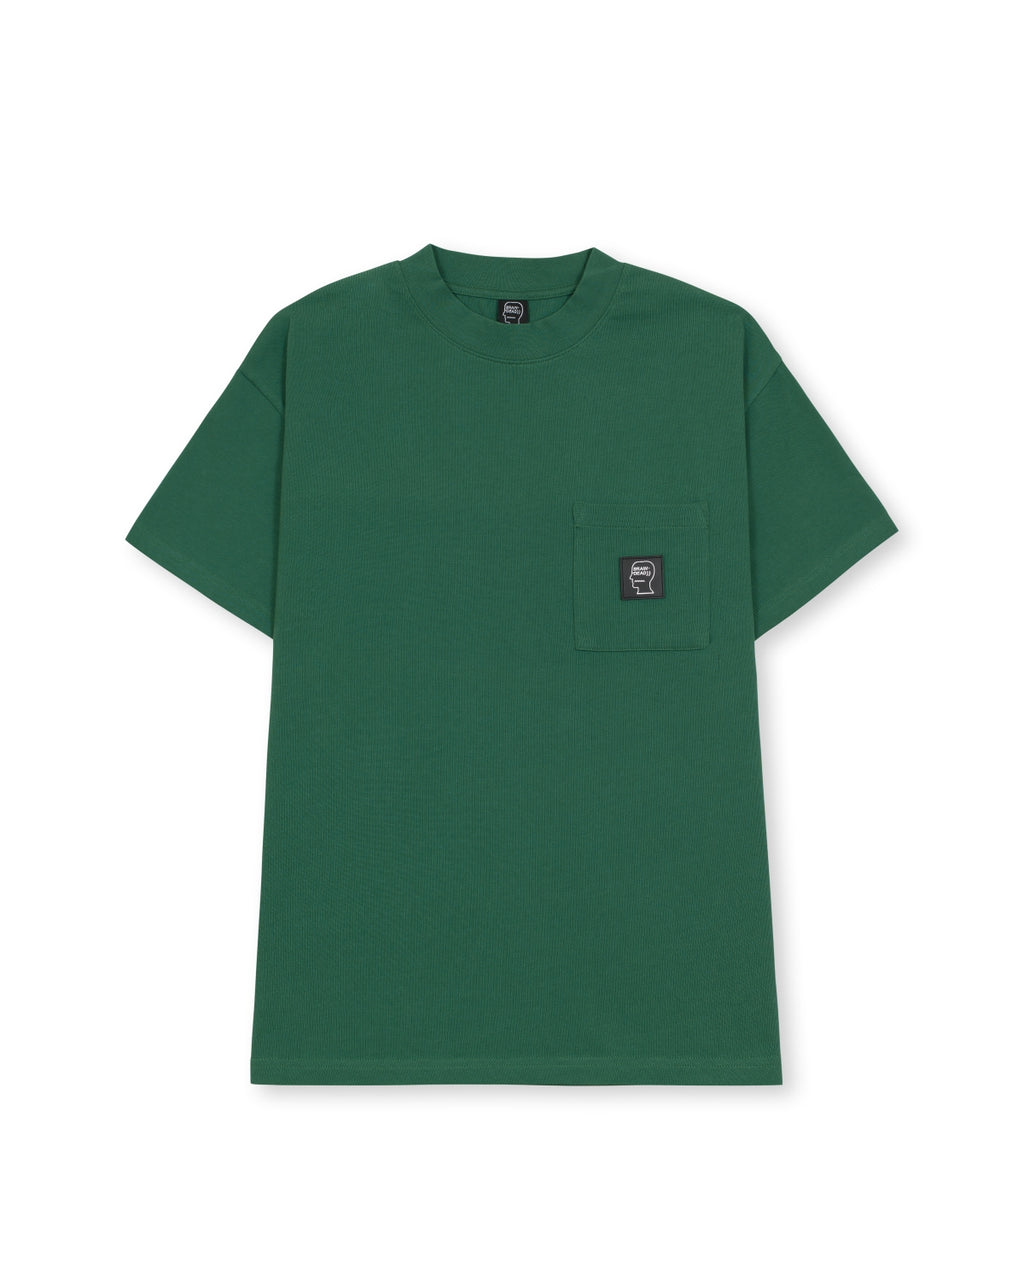 Heavyweight Jersey Mockneck Pocket Shirt W/ PVC - Green 1